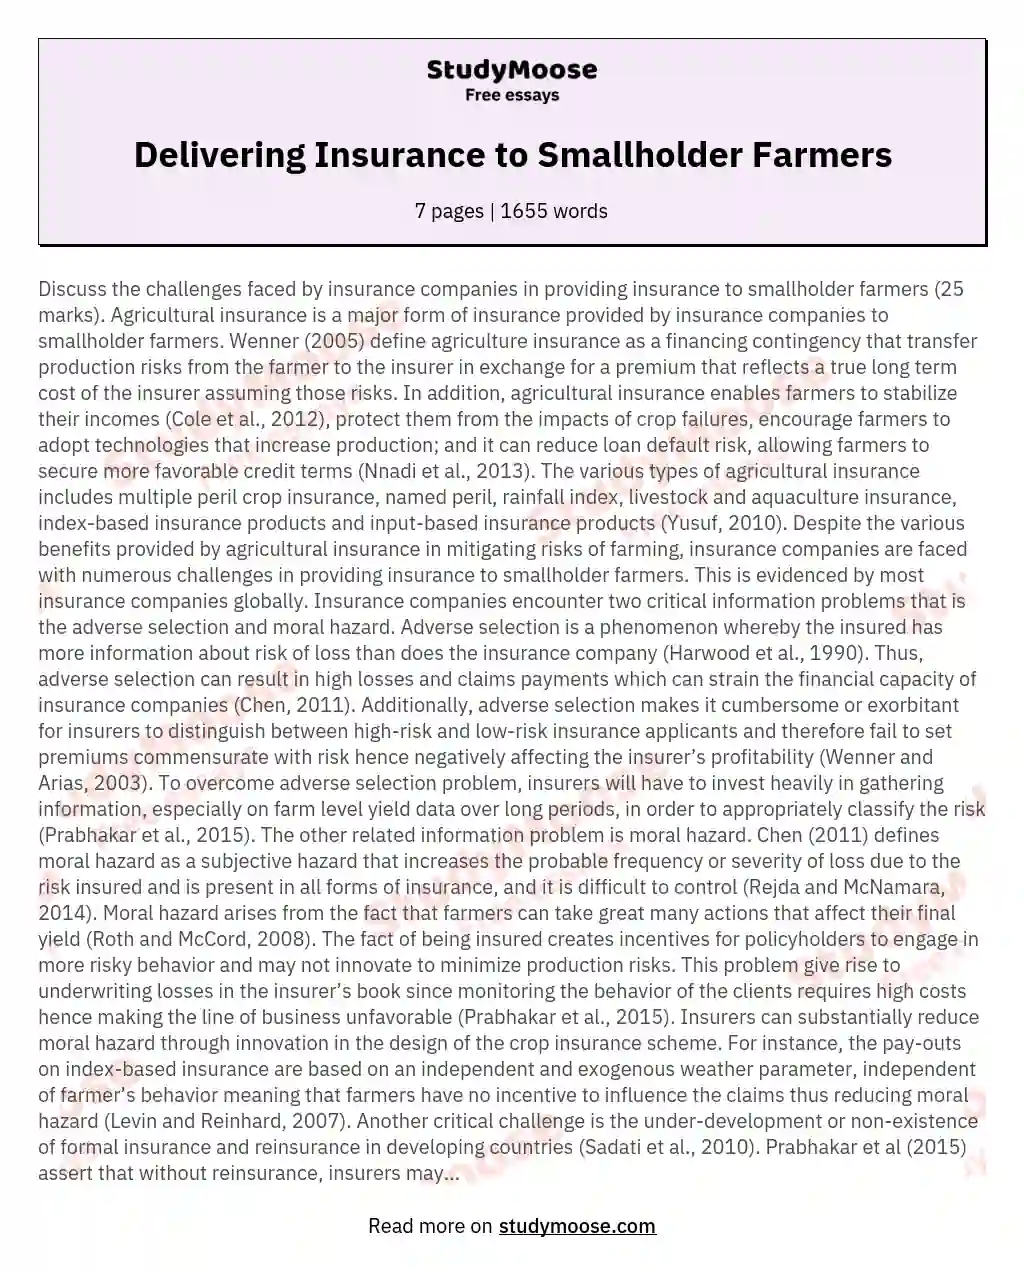 Delivering Insurance to Smallholder Farmers essay